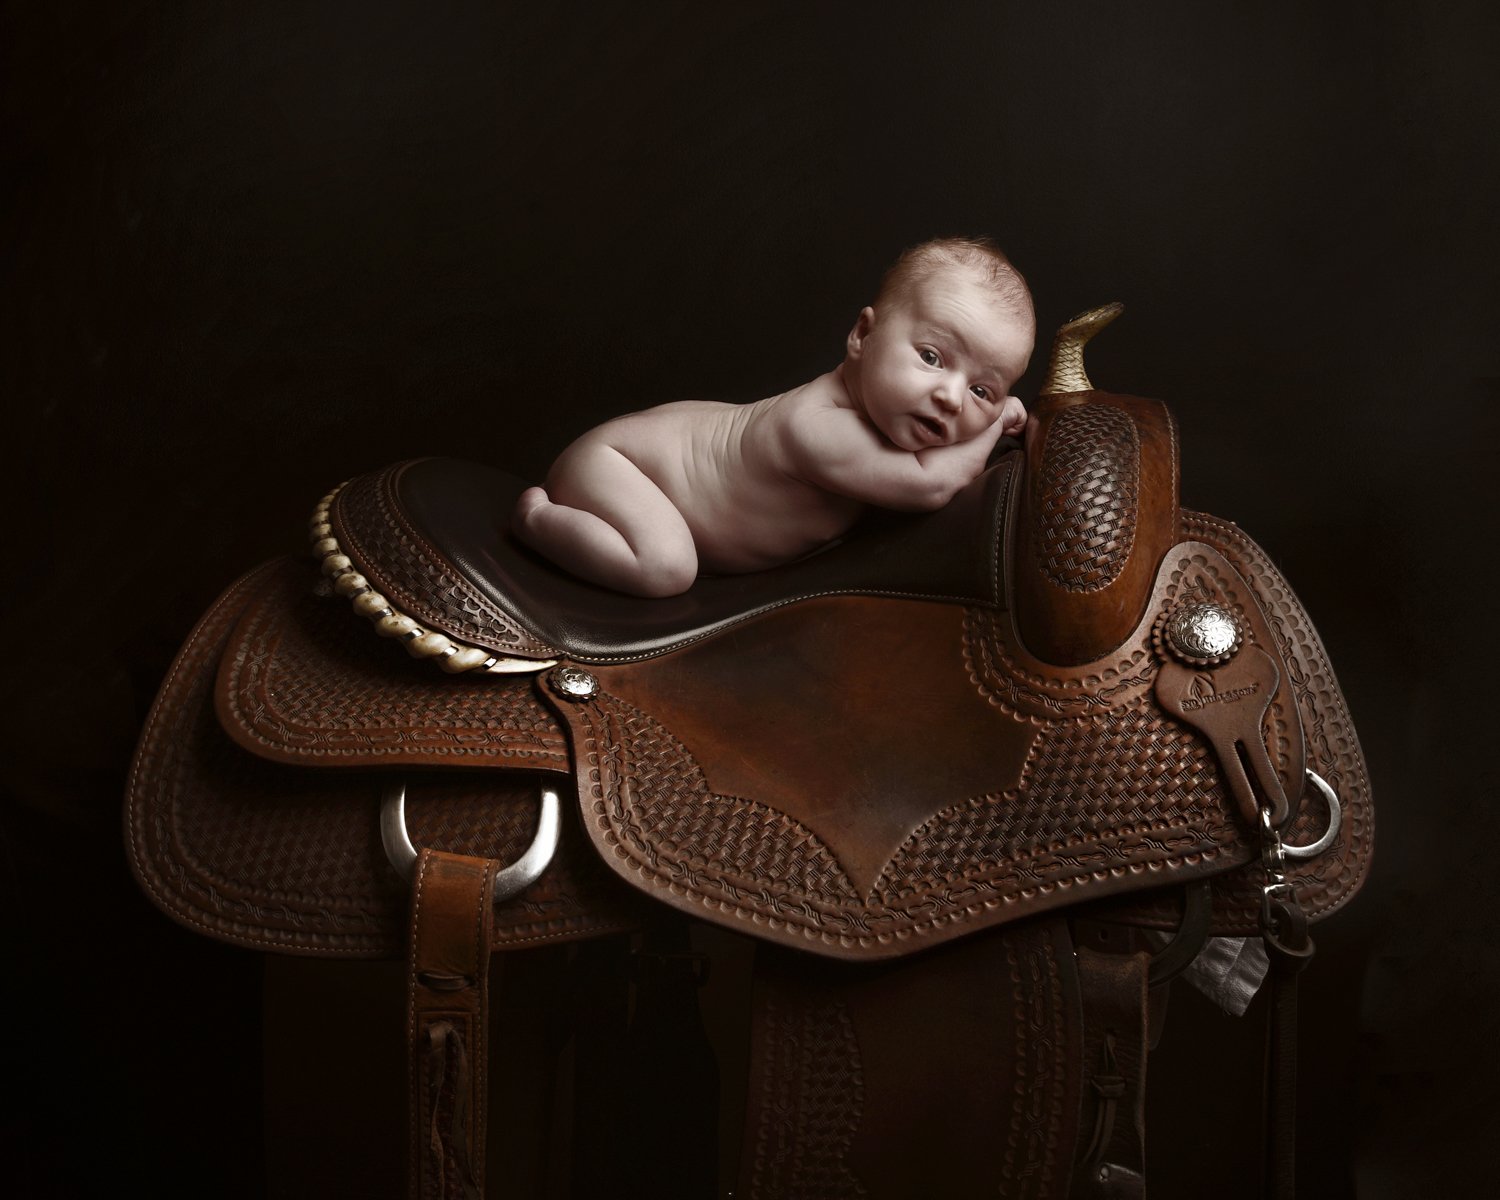 zest-photography-perth-newborn-portrait-photography-photographer-035.jpg